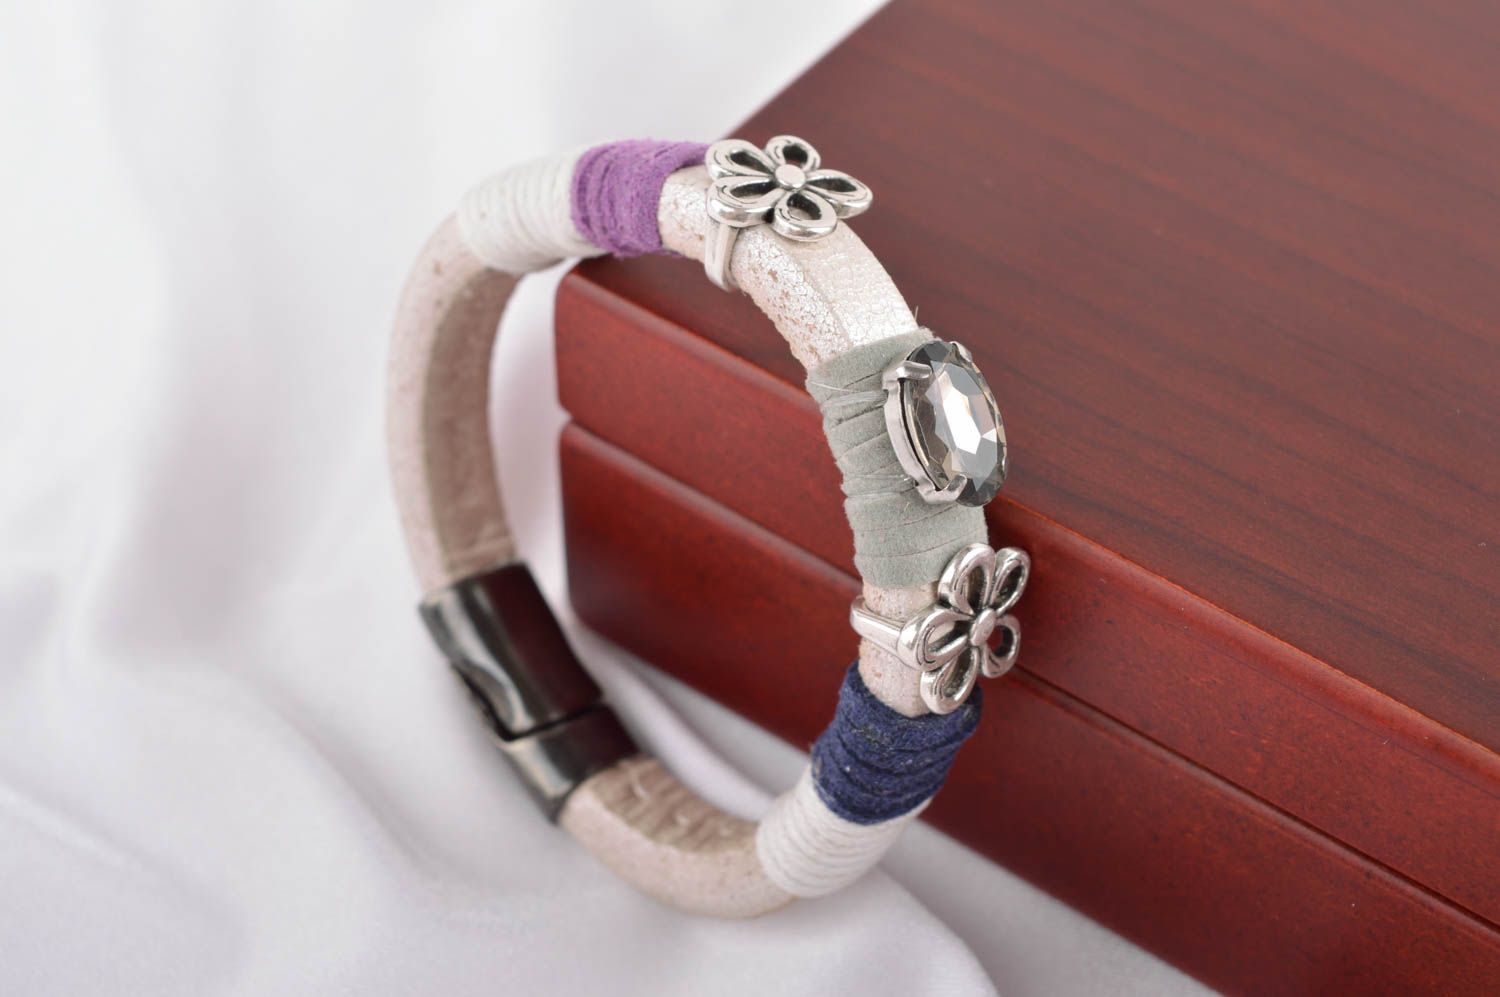 Stylish handmade leather bracelet designs leather goods fashion trends photo 1